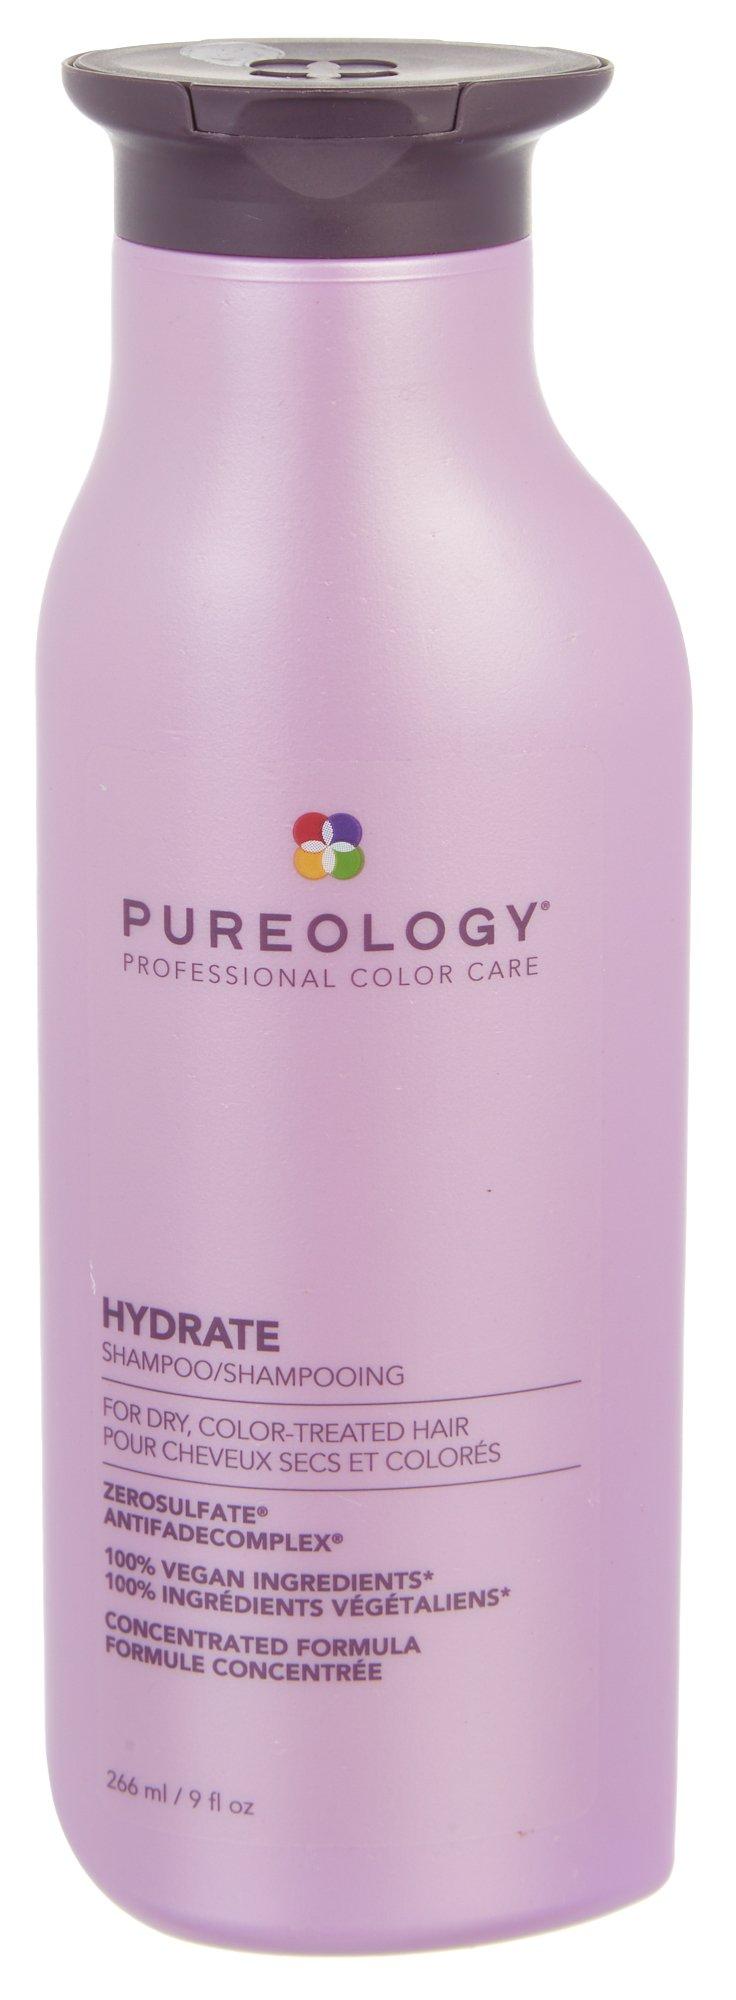 Pureology Pro Color Care Hydrate Shampoo 9.0 Fl.Oz.